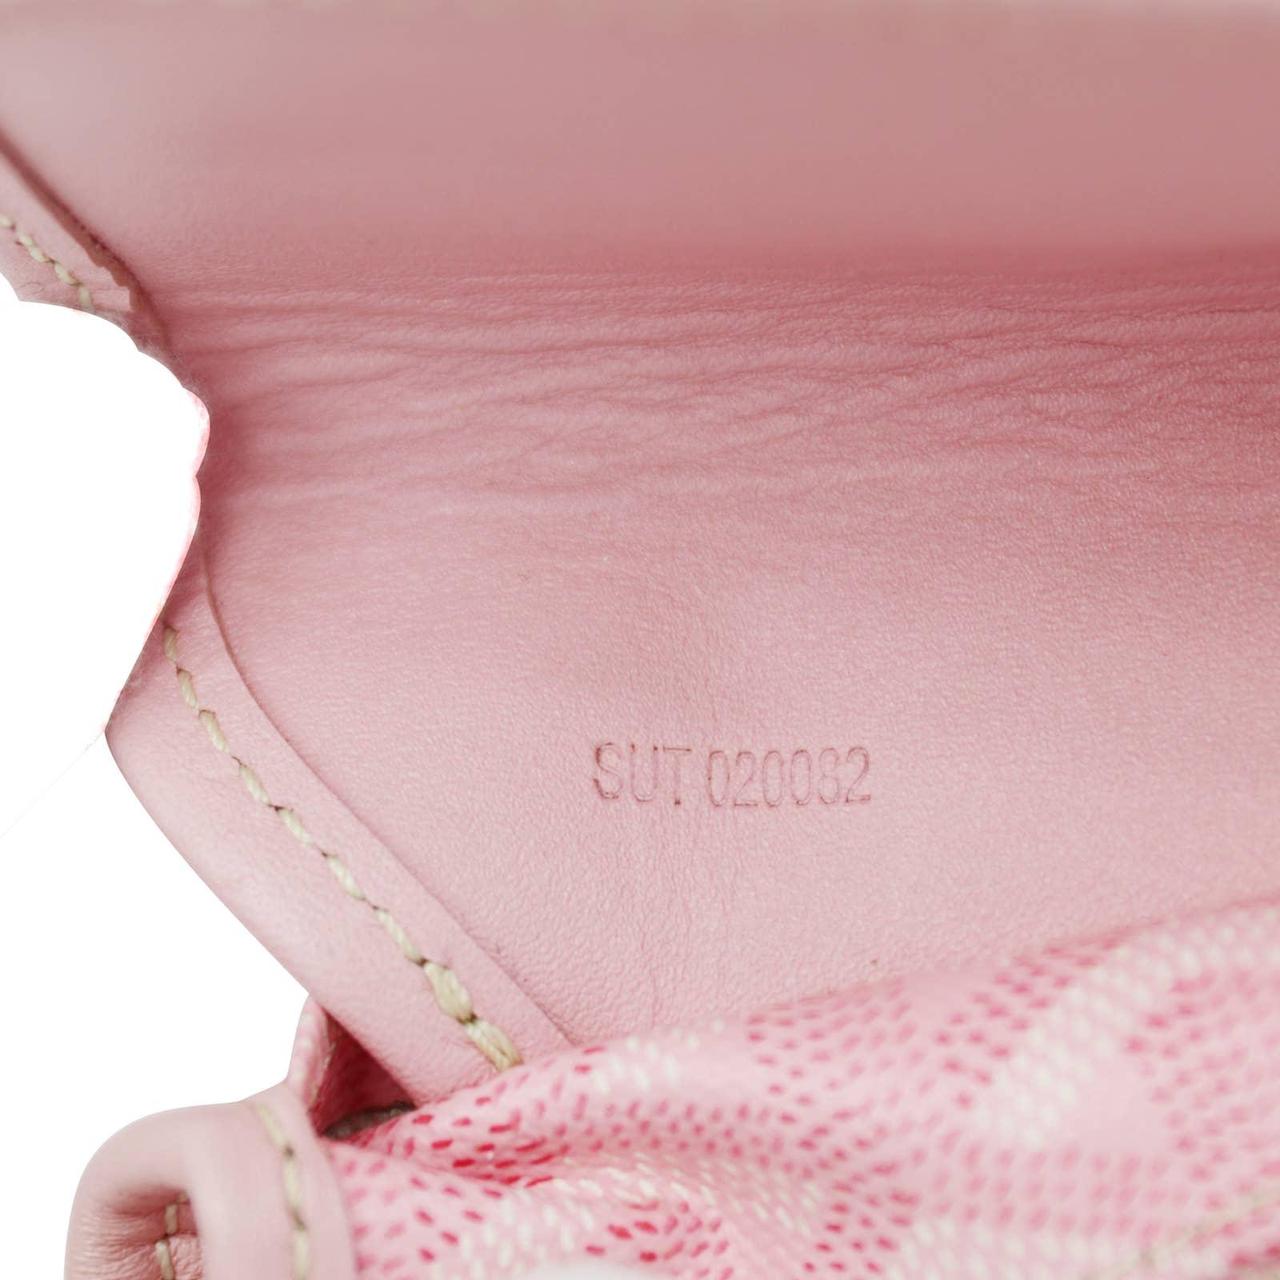 Pink goyard wallet #wallet #pink #goyard #fashion - Depop